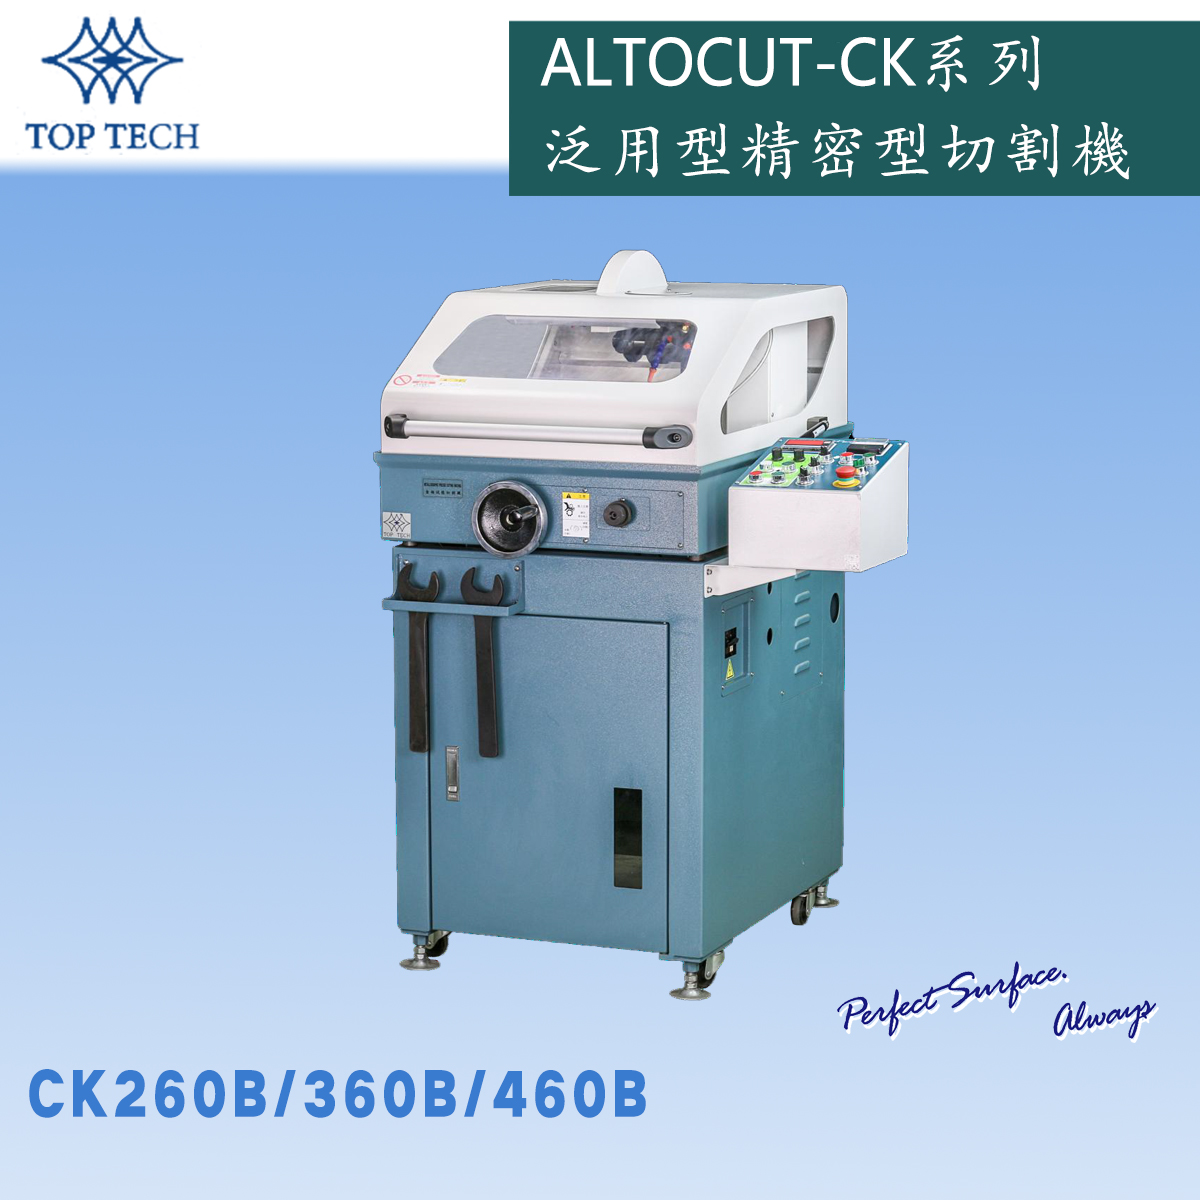  CK260B/360B/460B泛用型精密切割机